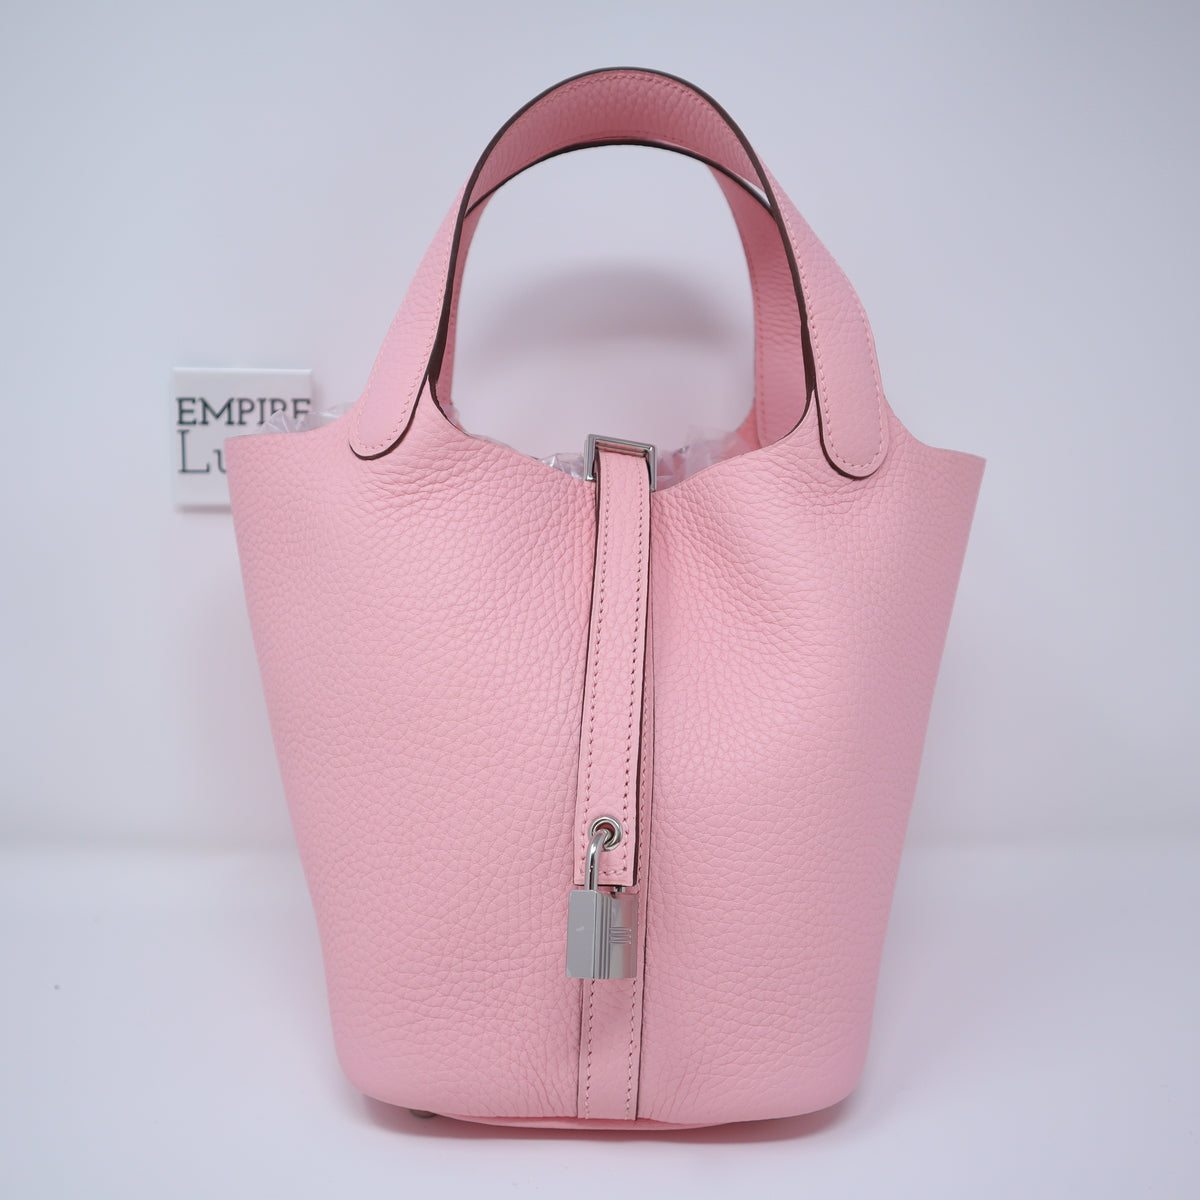 New in stock! Hermès 30cm Rose Texas in Clemence leather! Available now! 🌺  #priveporter #hermes #birkin #birkin30 #miami #rosetexas